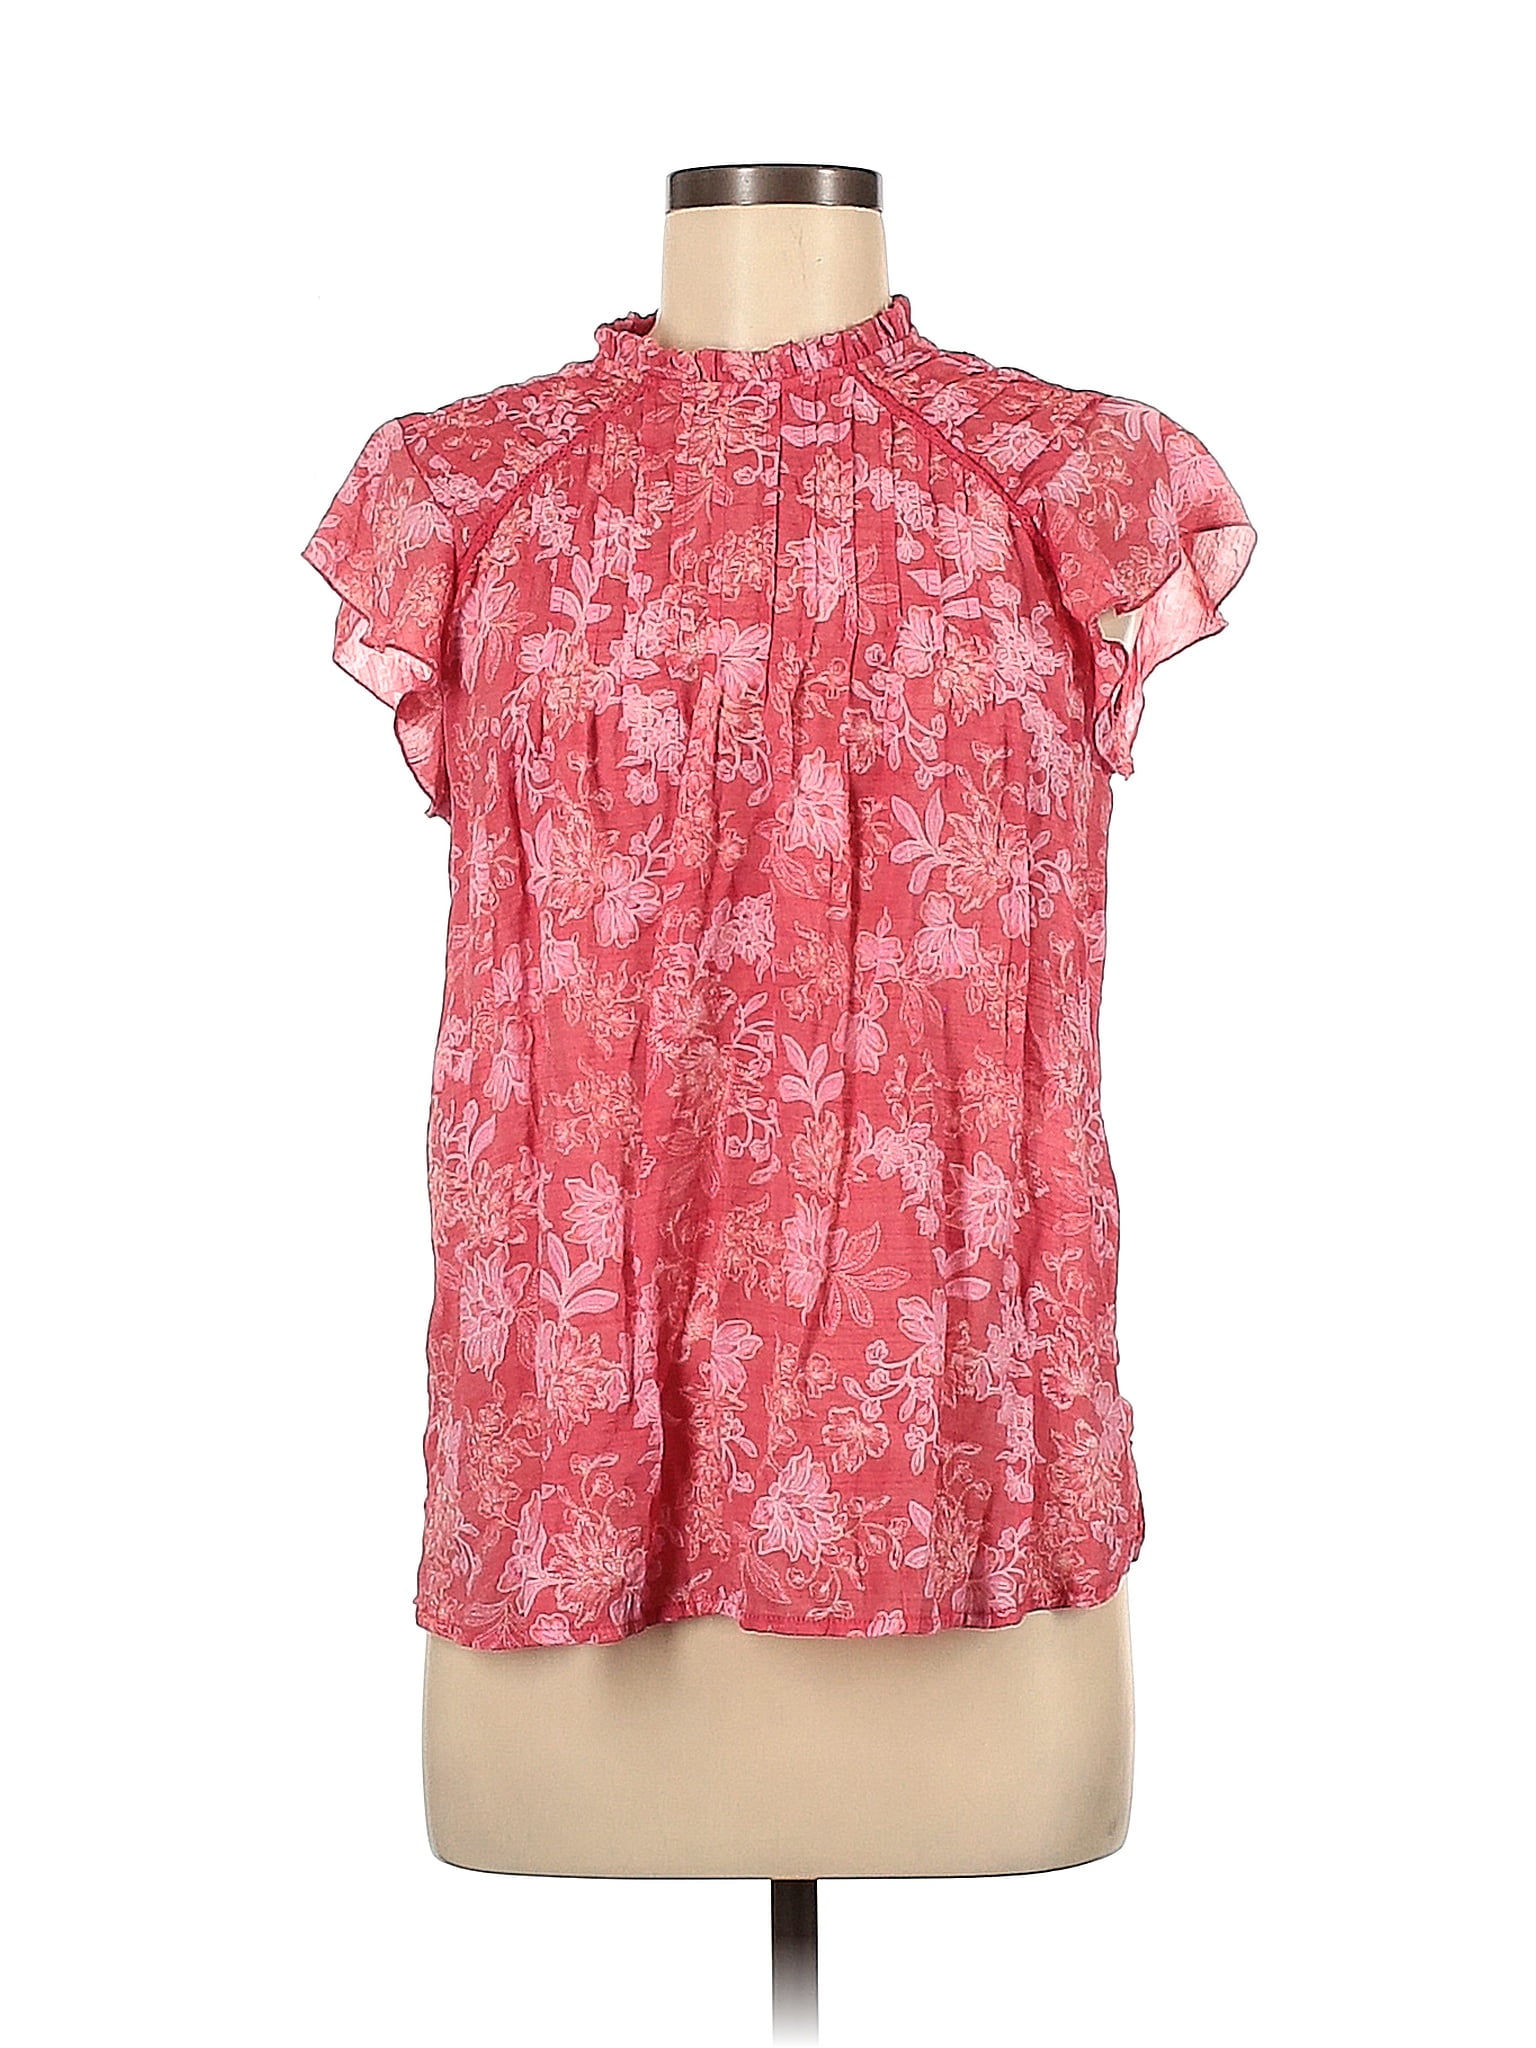 NANETTE Nanette Lepore Floral Red Short Sleeve Blouse Size S - 78% off ...